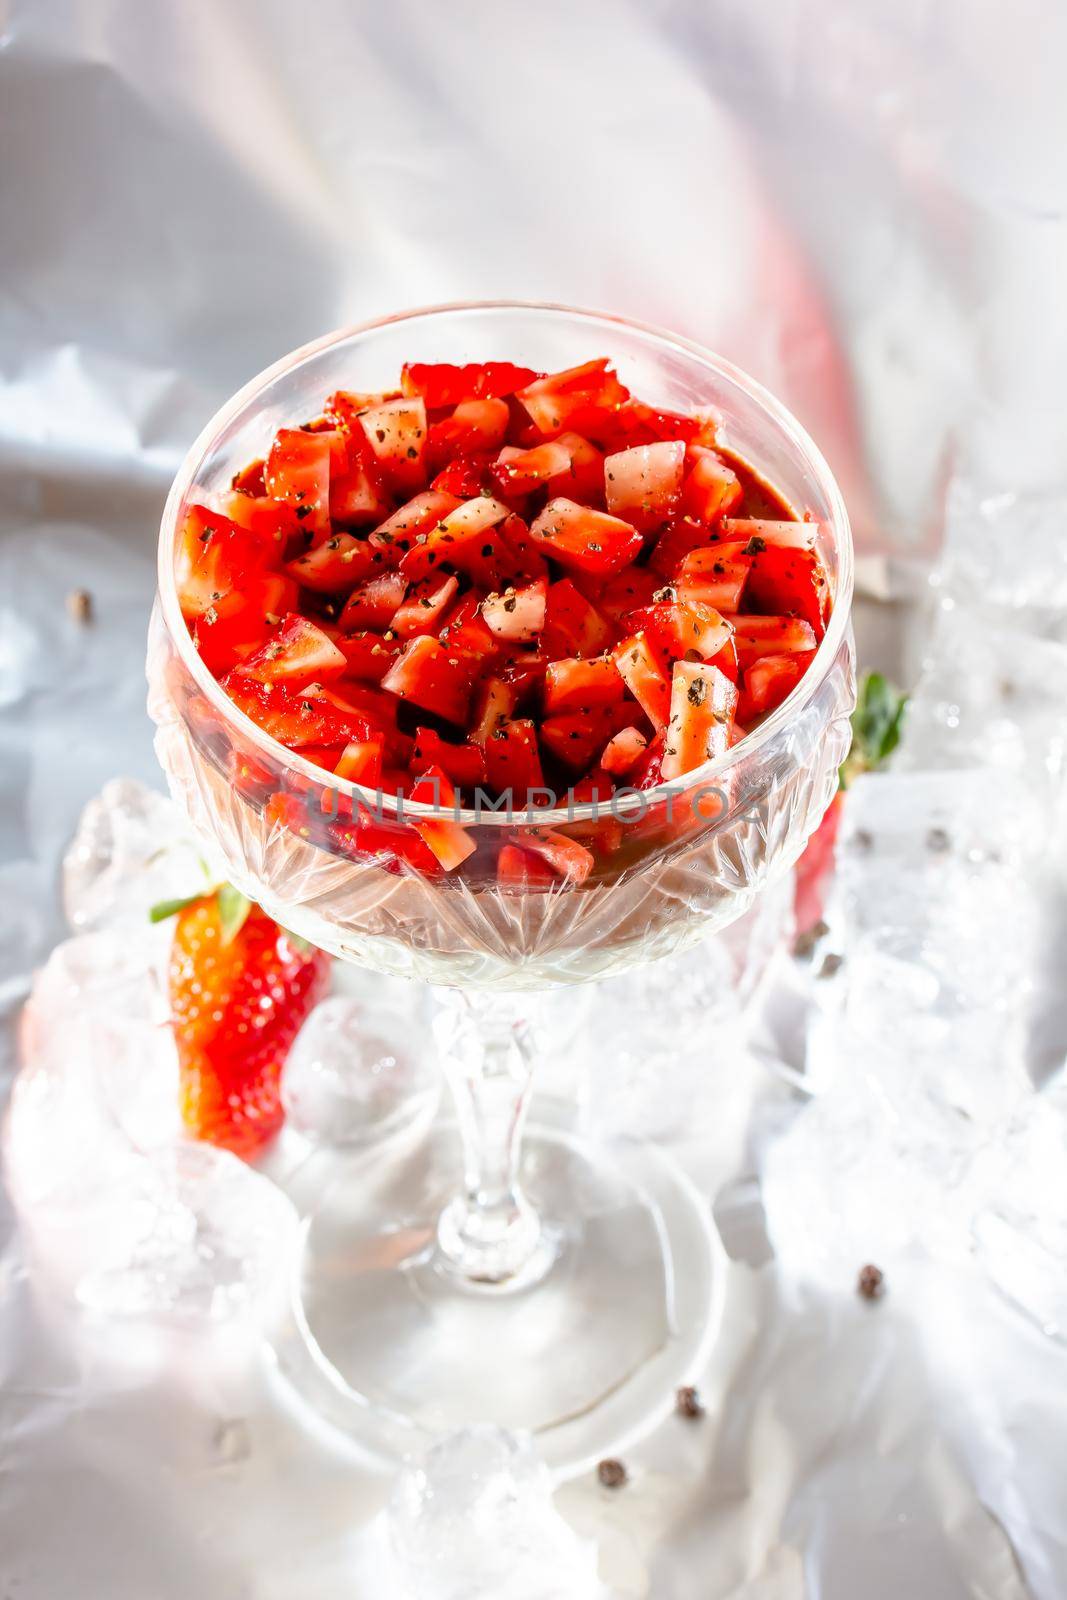 luxurious dessert Tiramisu in a glass with coffee beans, tiramisu with chocolate and strawberries.